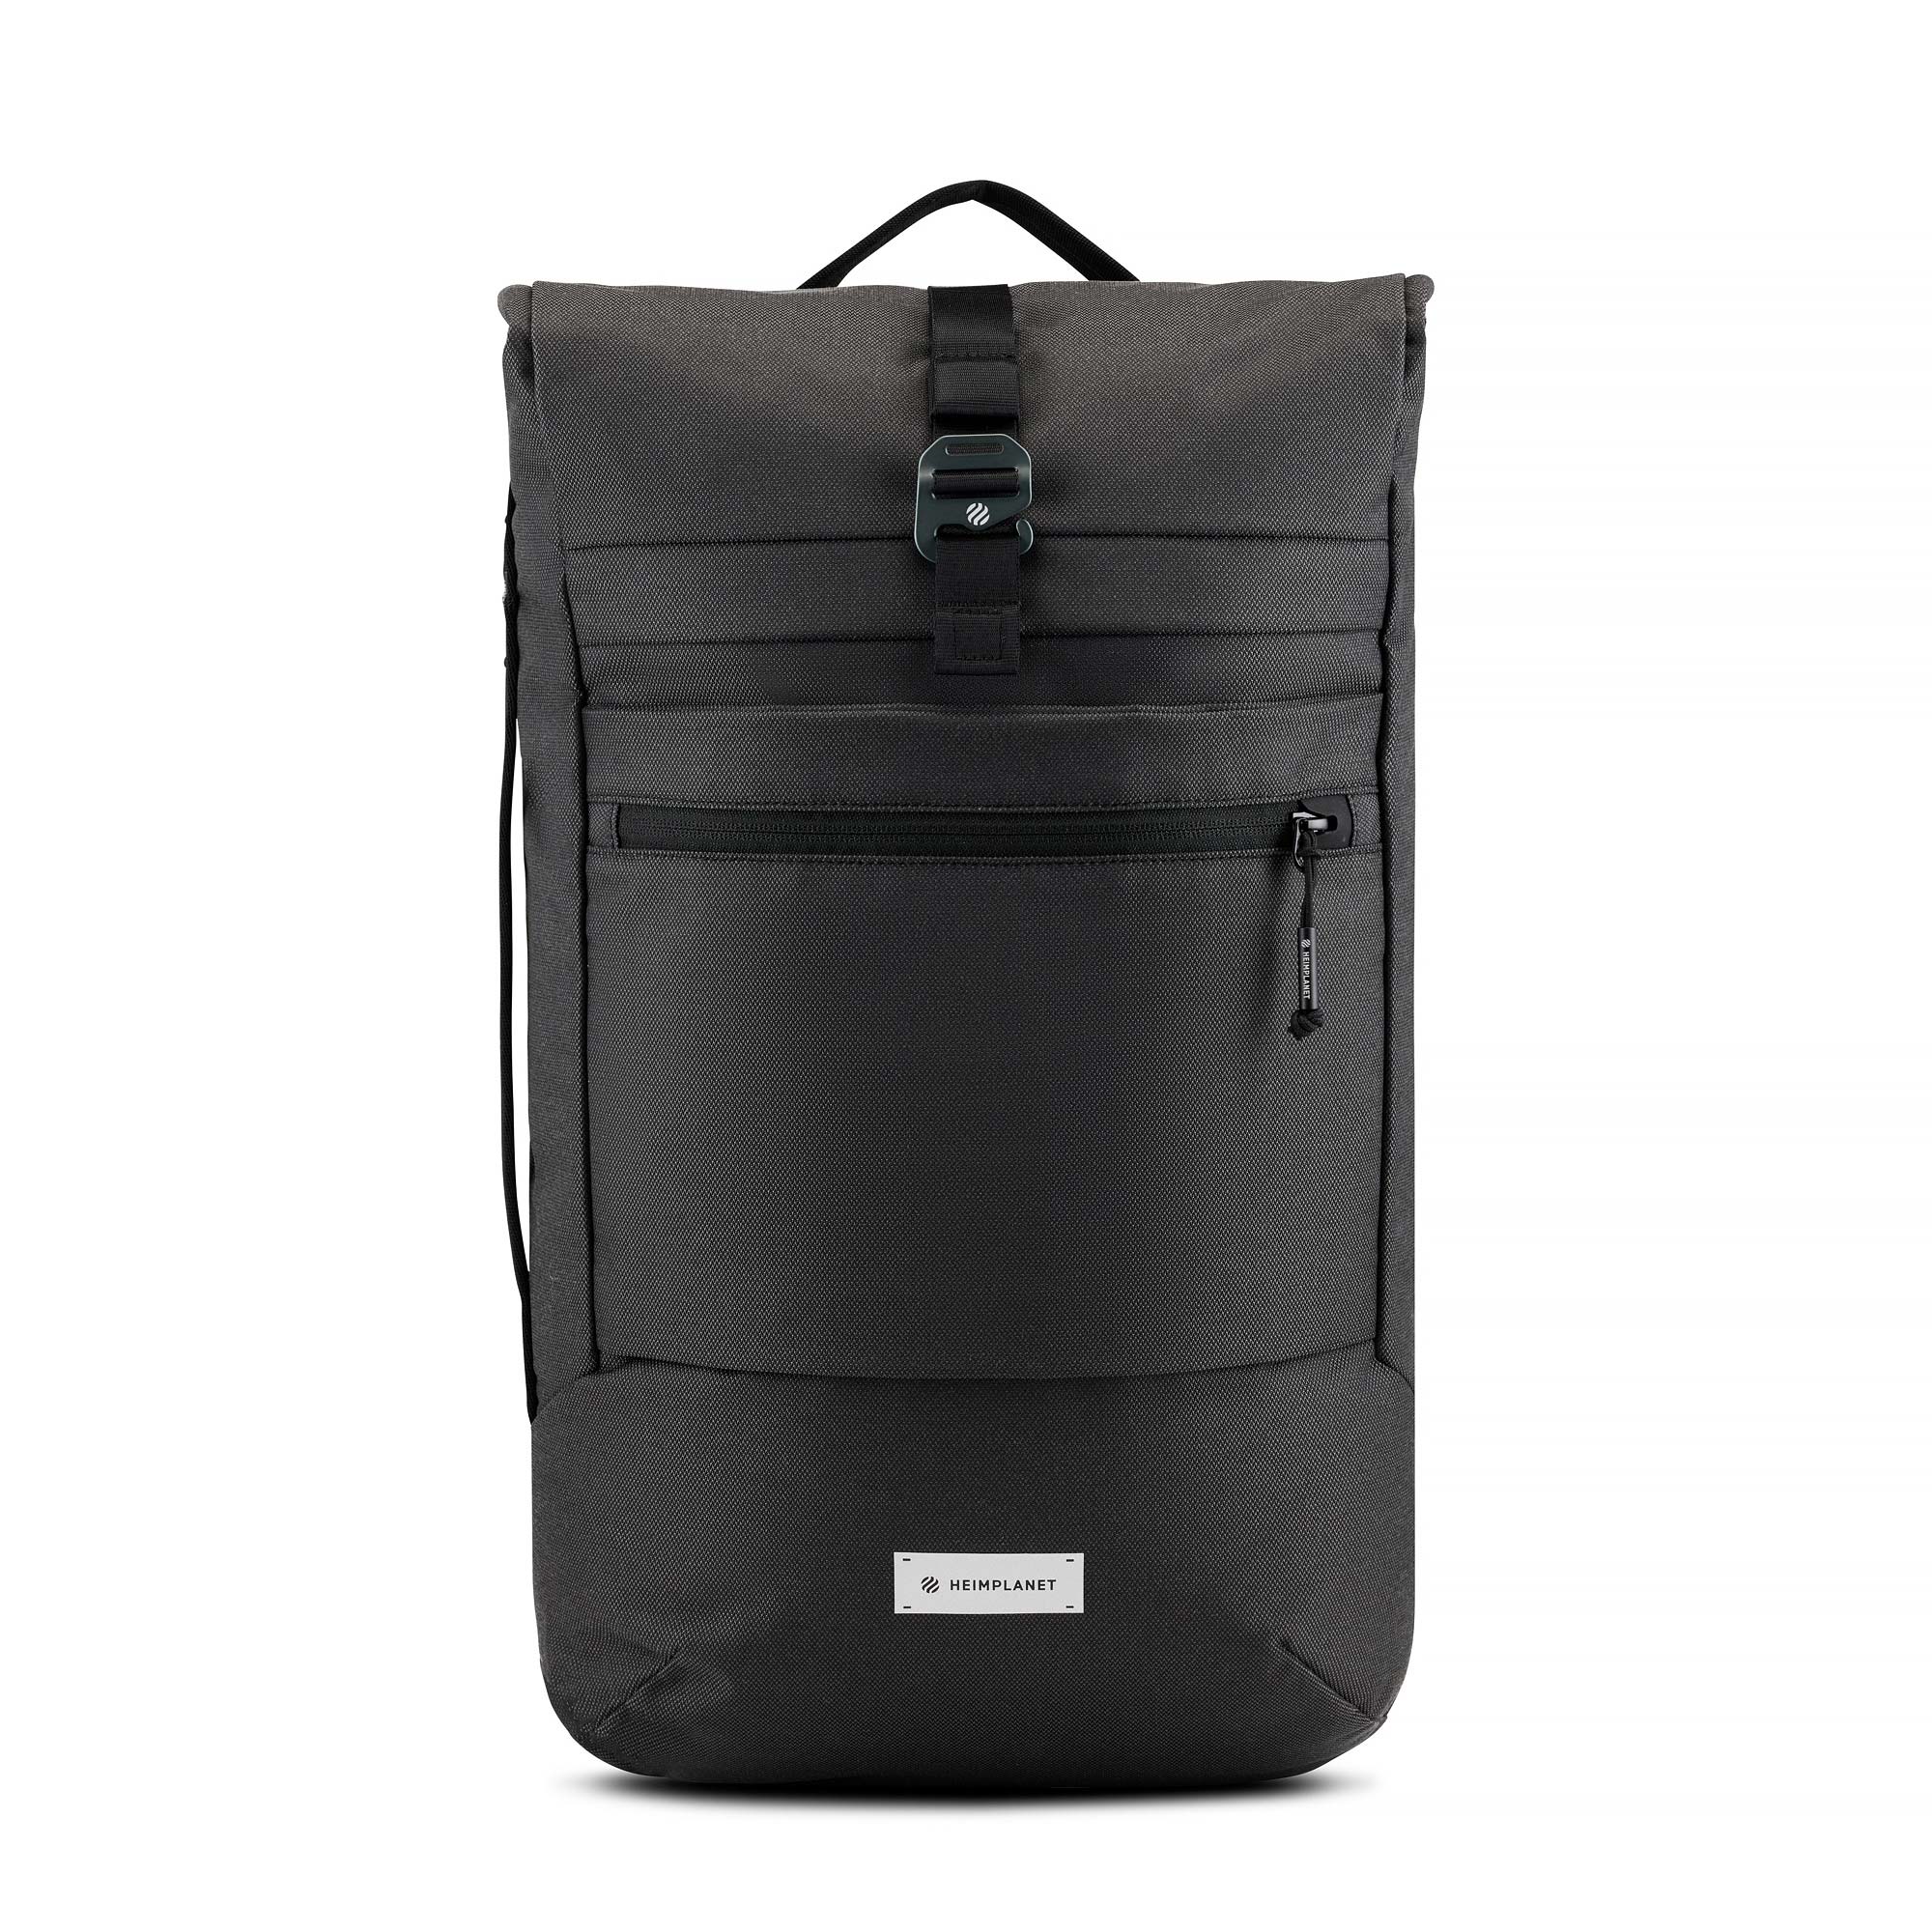 Carry Essentials Commuter Pack, black/castlerock